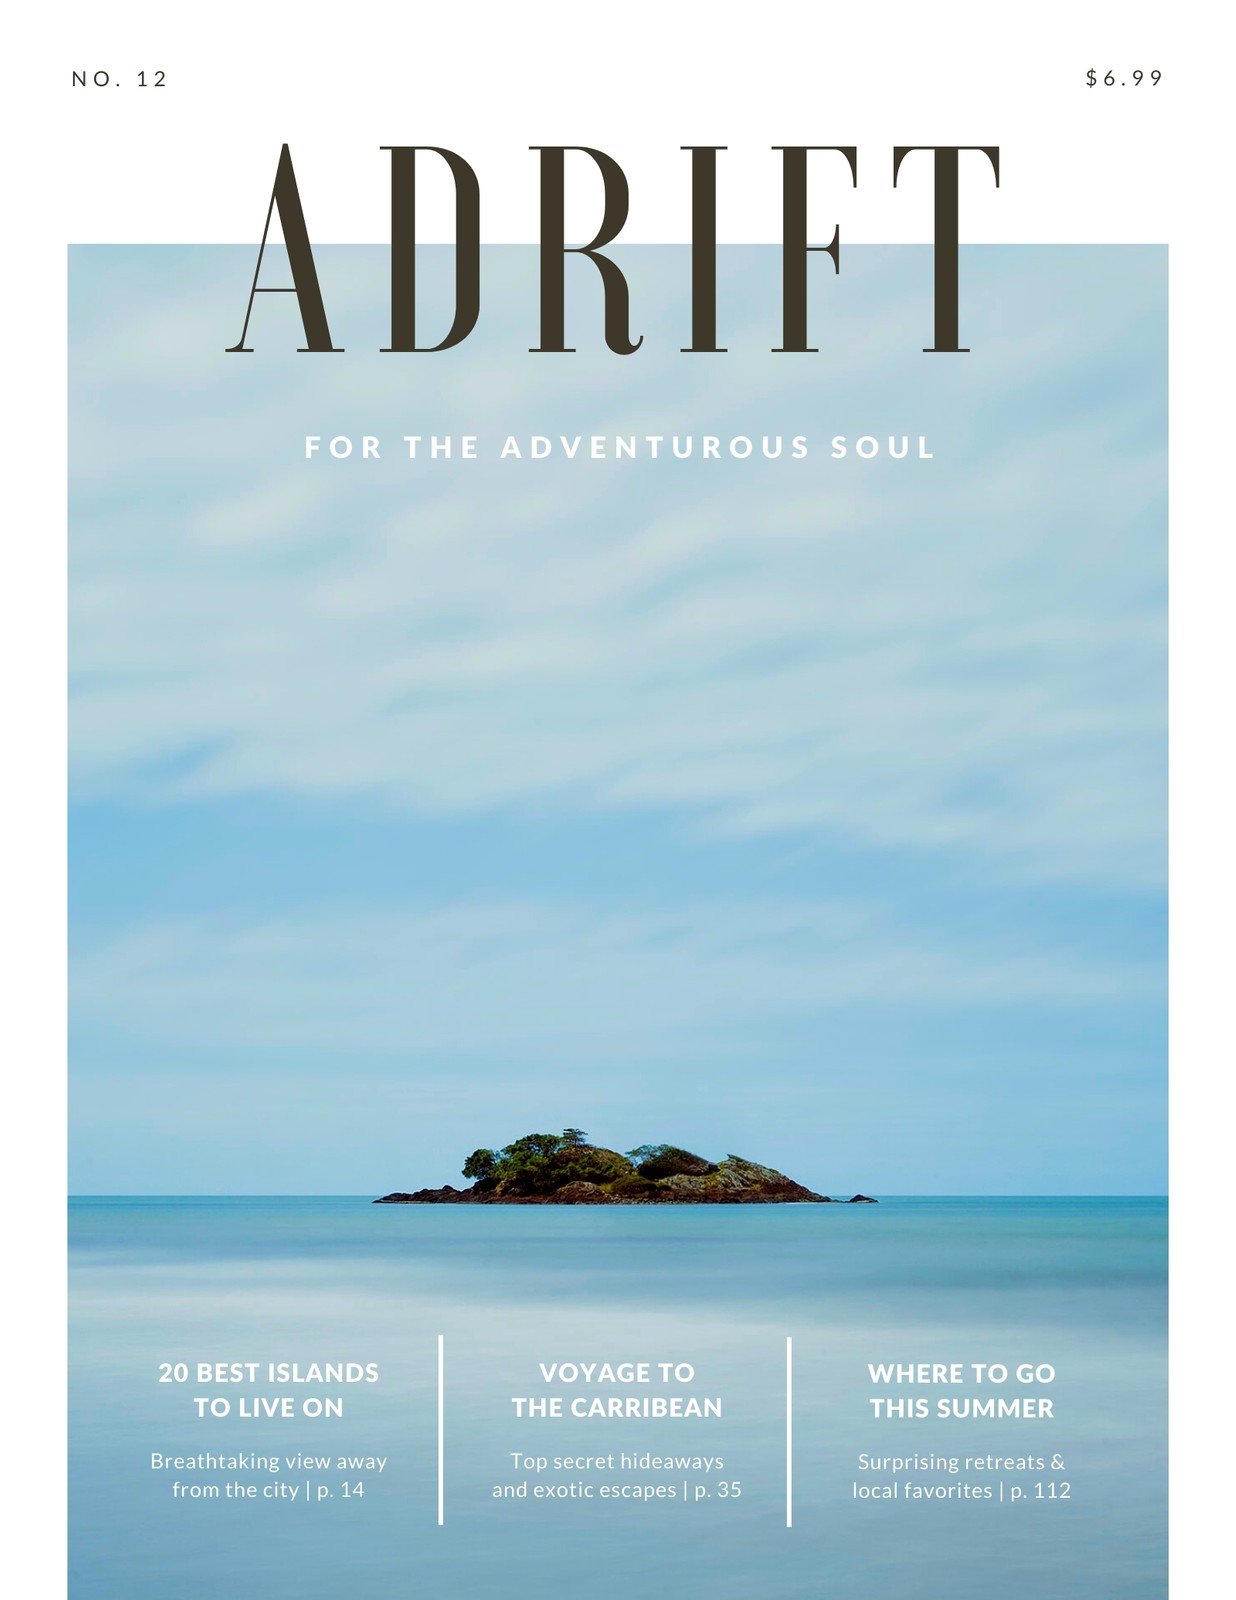 adrift-island-travel-magazine-templates-by-canva